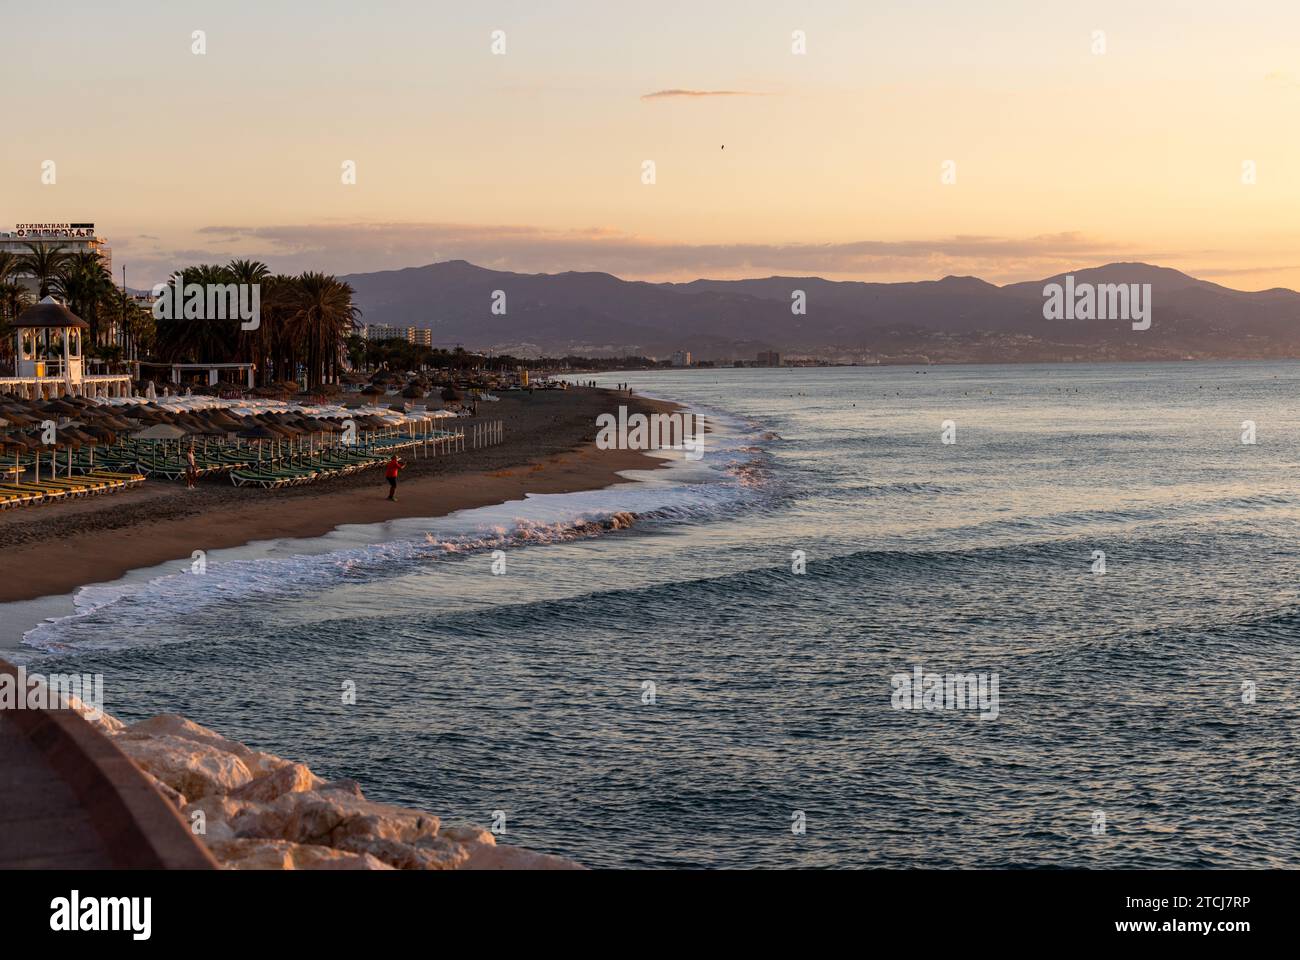 View of Bajondillo Beach in Torremolinos at sunrise. Costa del Sol, Spain. Stock Photo